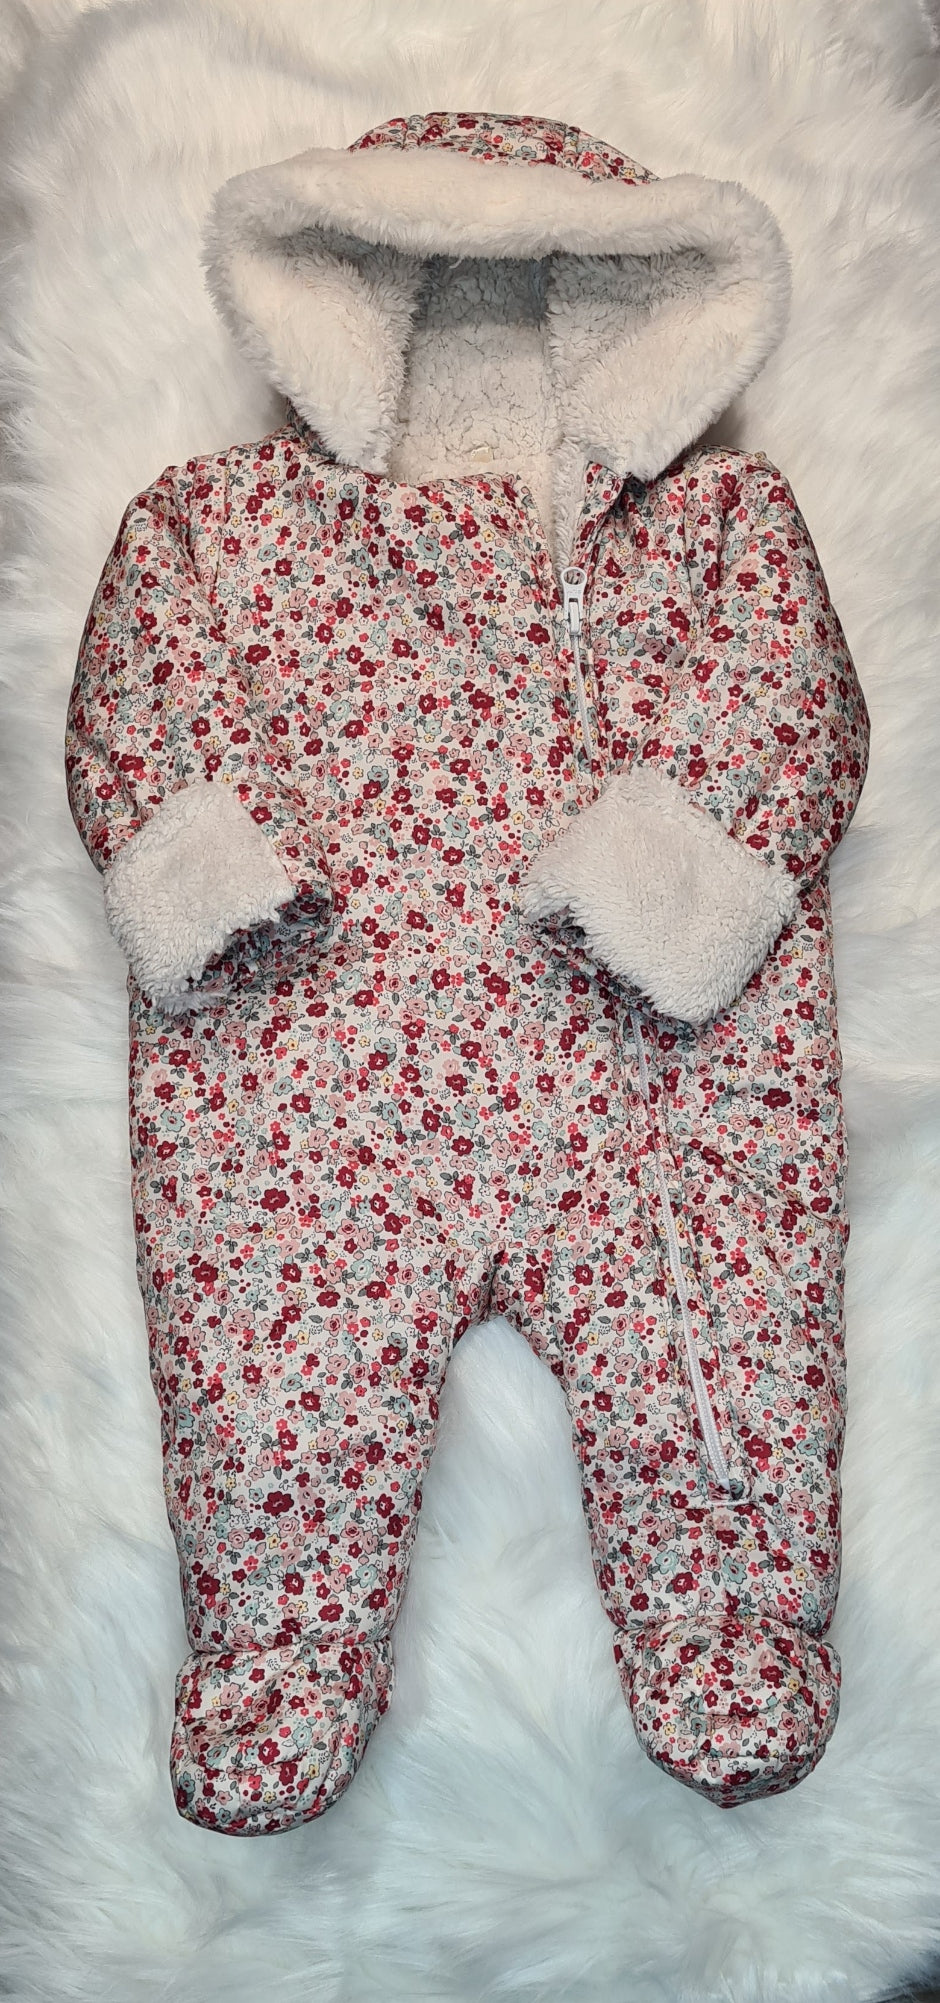 Girls 3-6 months Flower Snow Suit